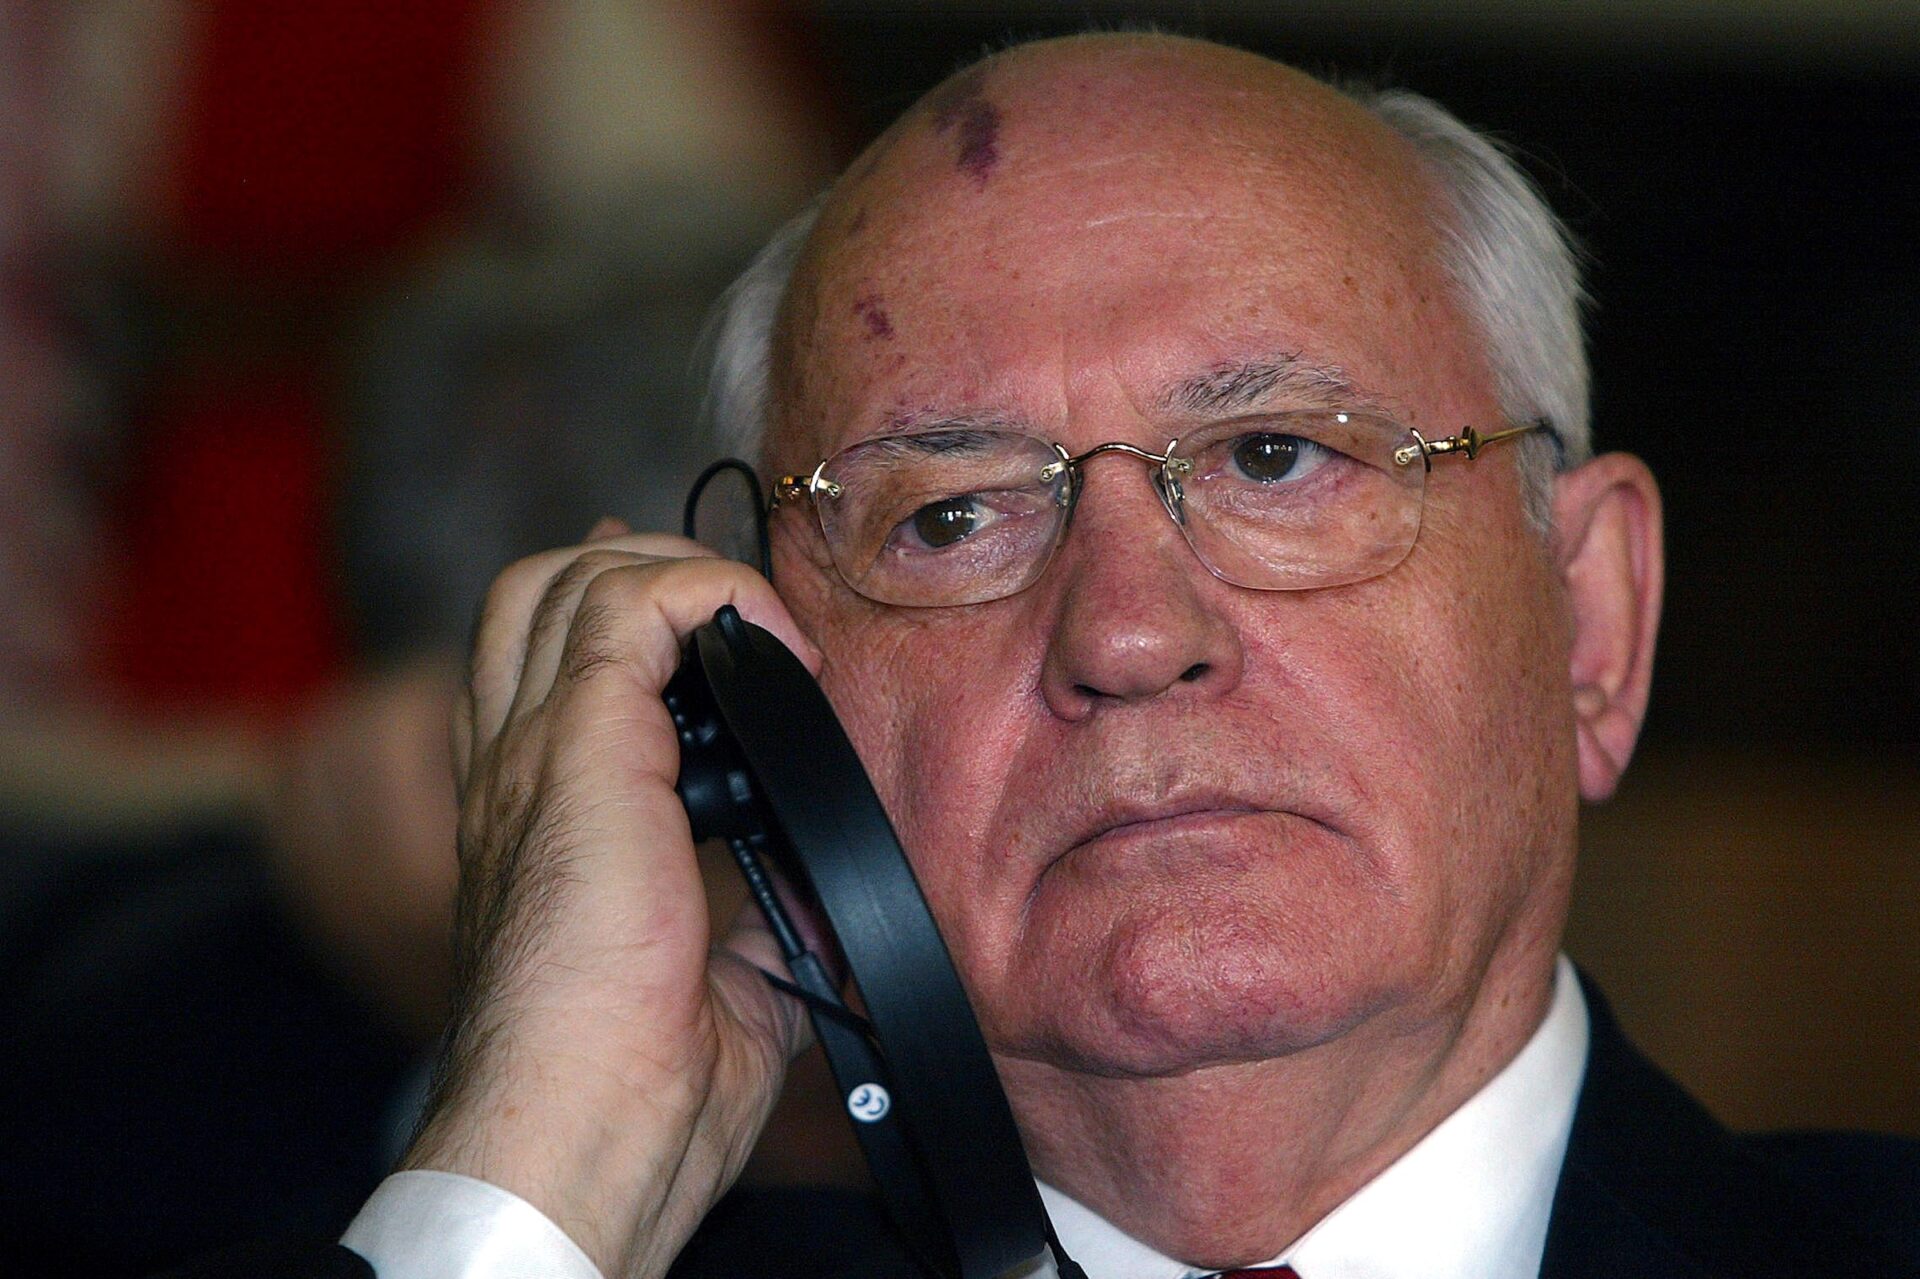 Celebrate Gorbachev’s failure to save the Soviet Union, not his heroism